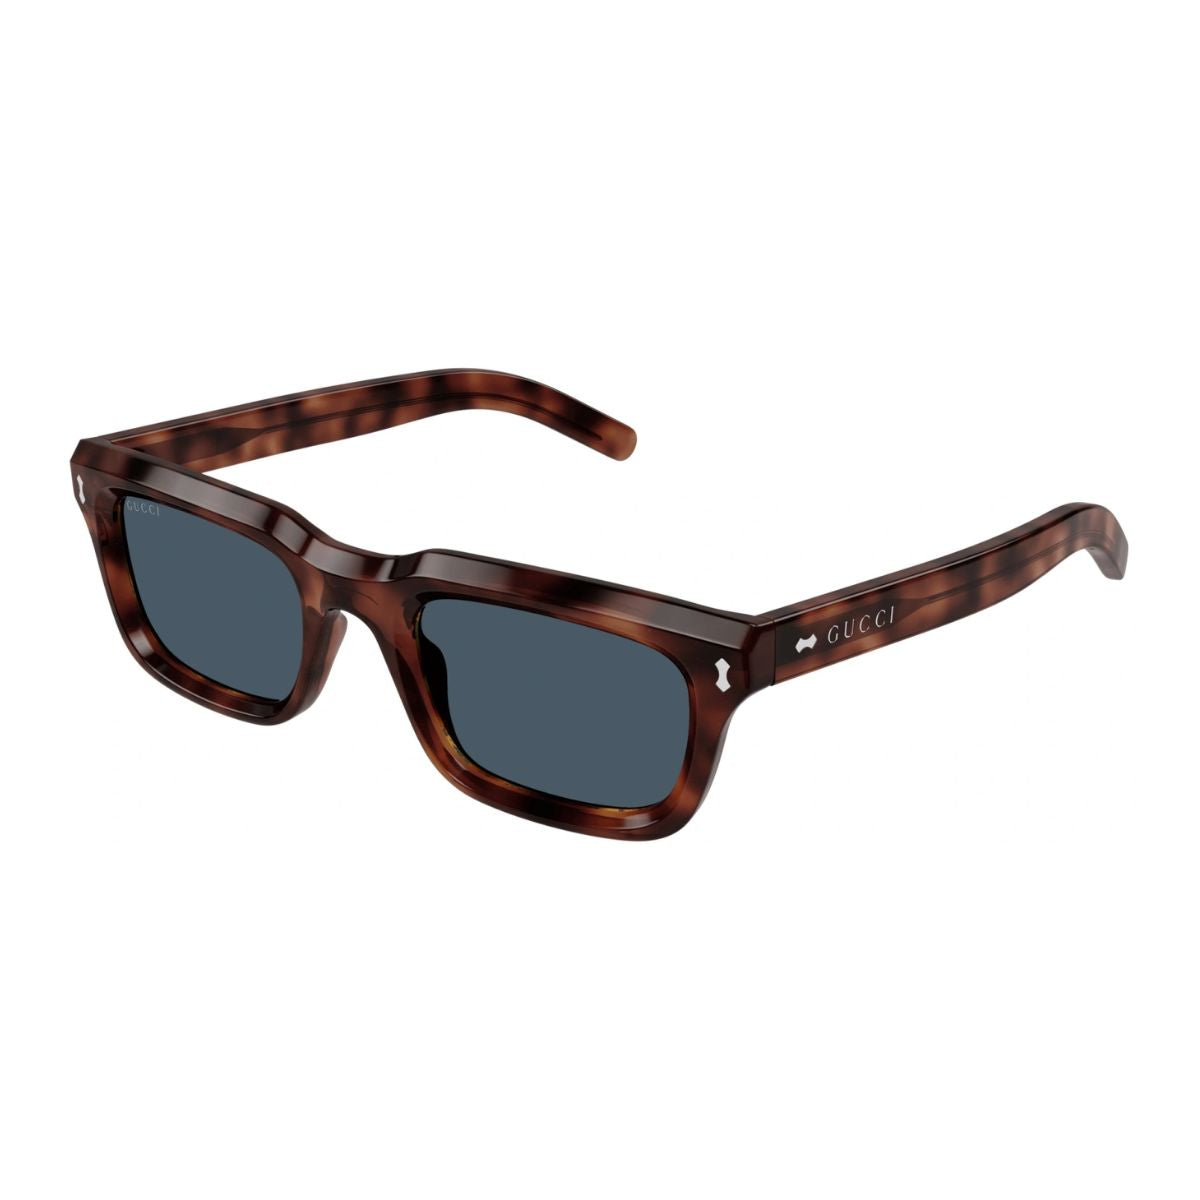 "Gucci GG1524S 002 Sunglasses - Men's Fashion Eyewear"